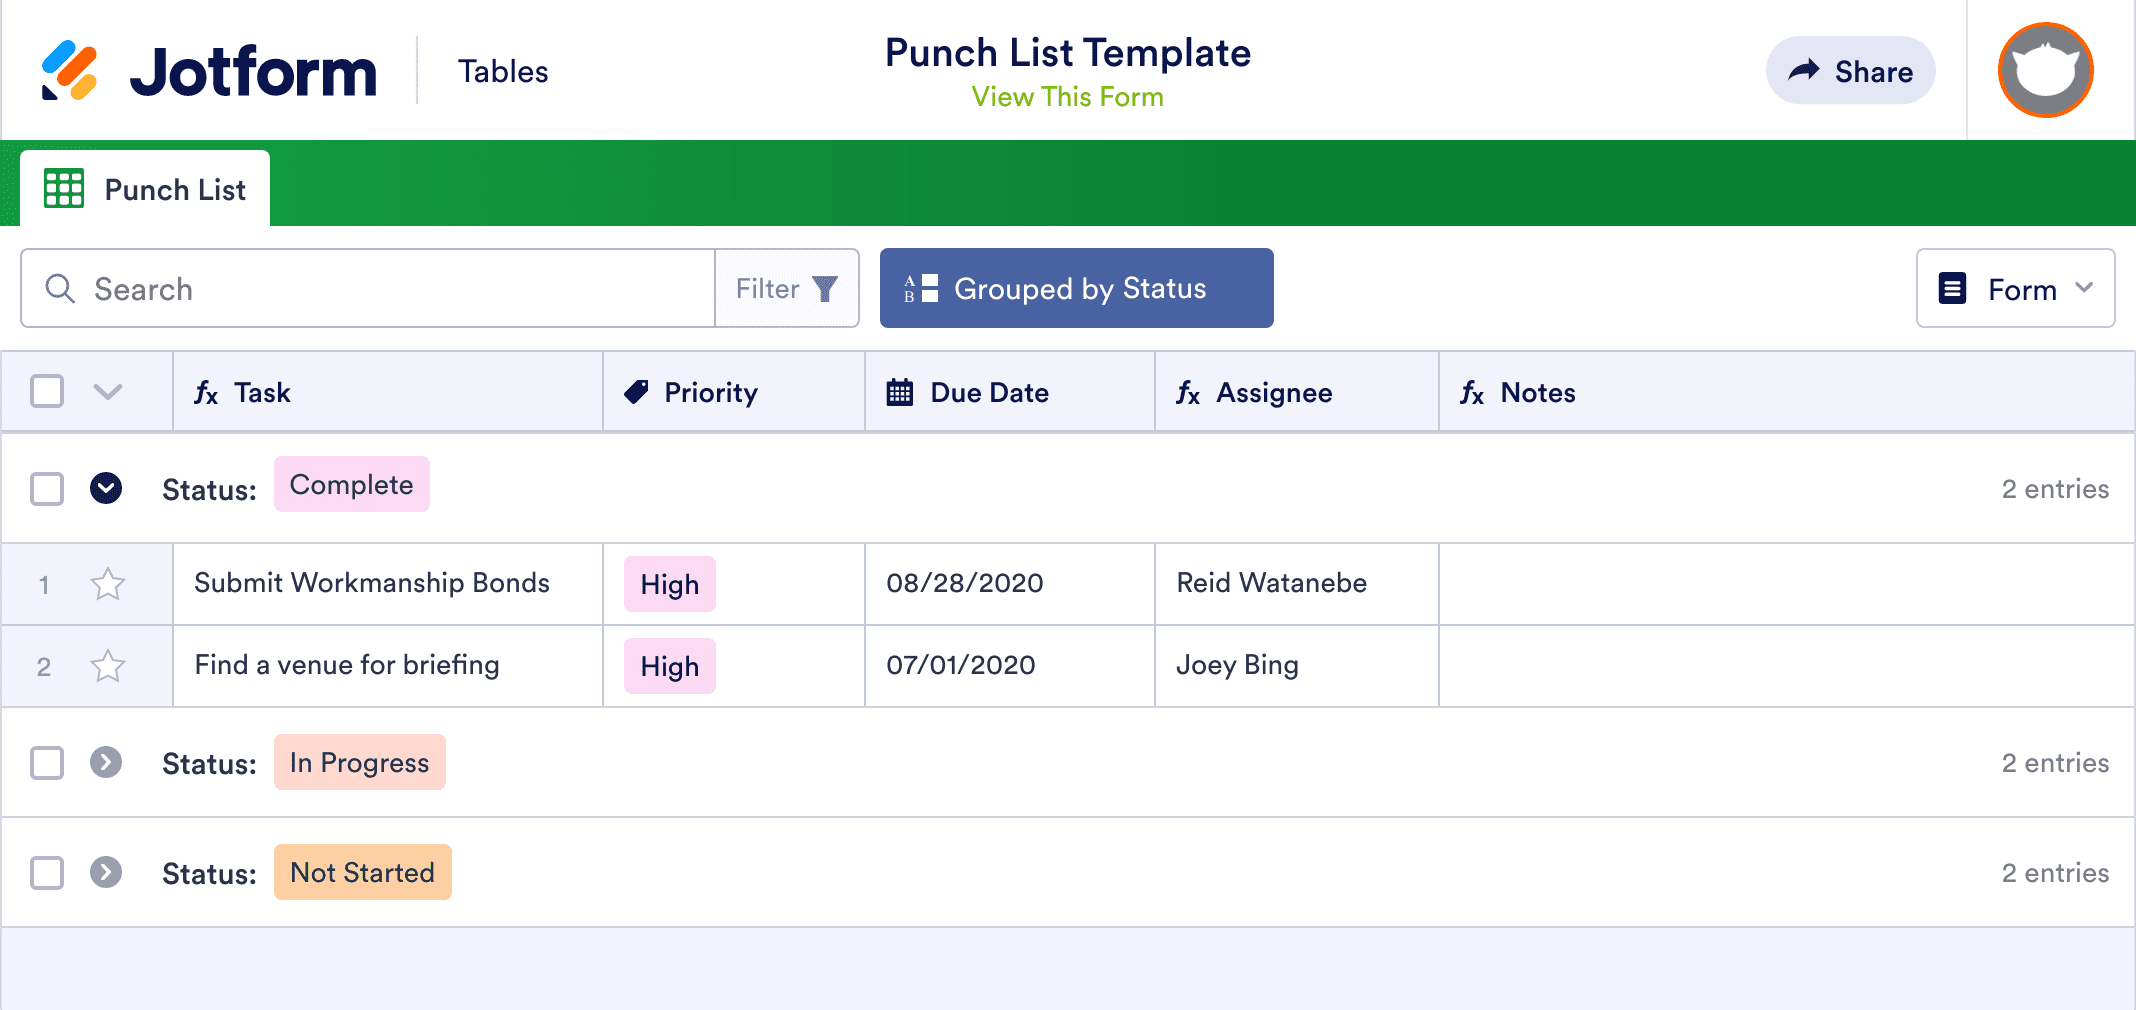 Punch List Template